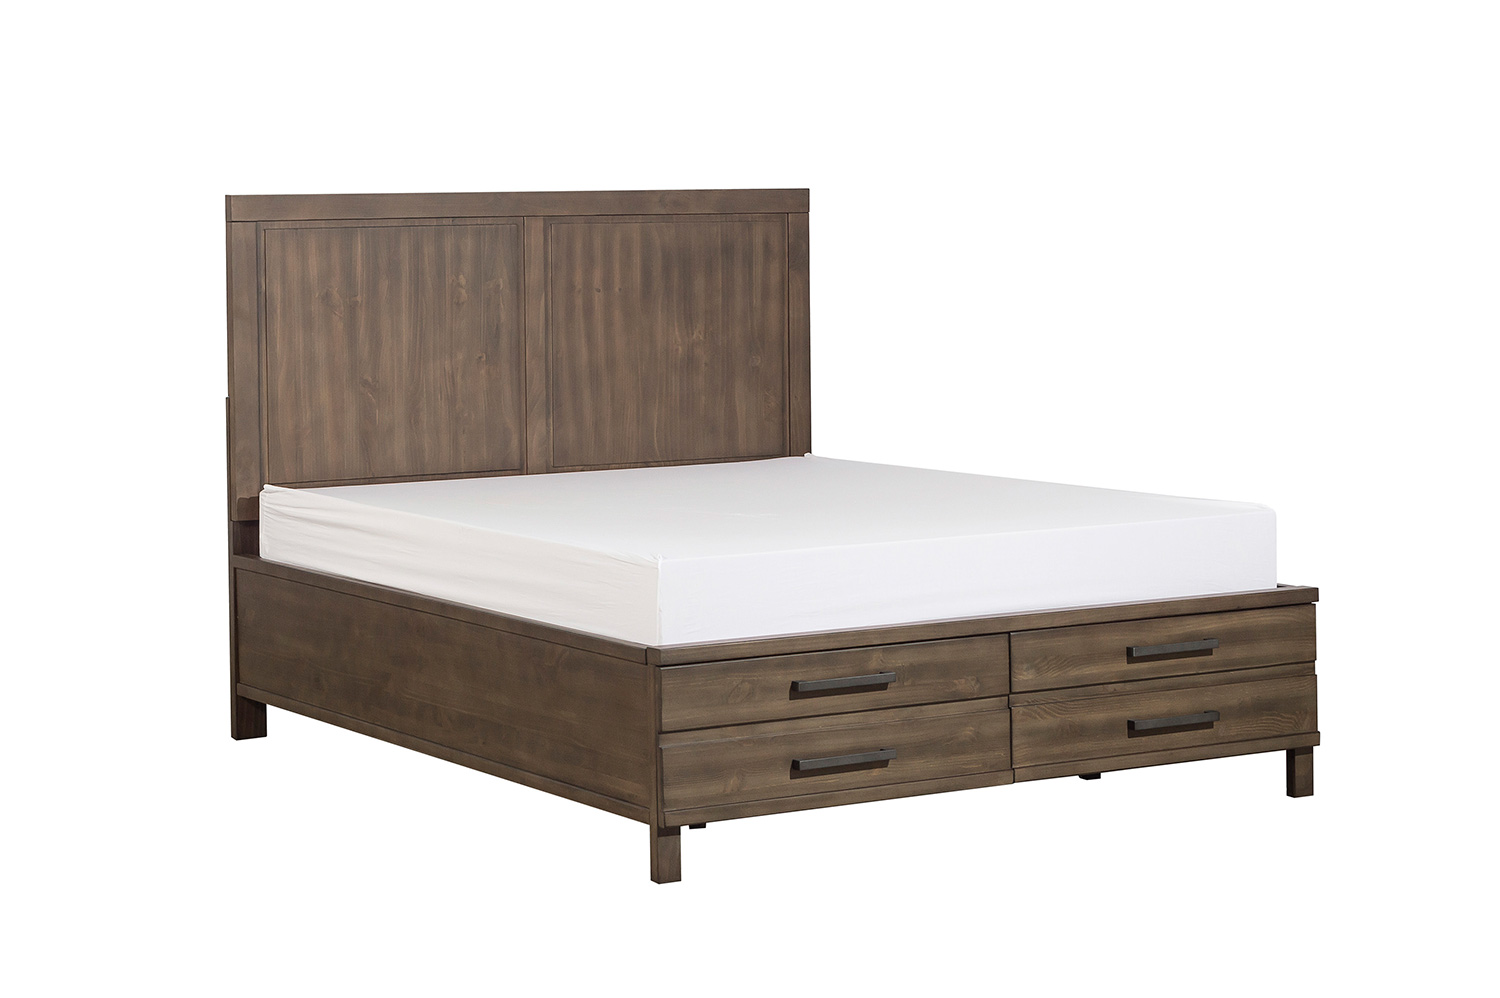 Homelegance Bracco Platform Bed with Footboard Storage - Brown